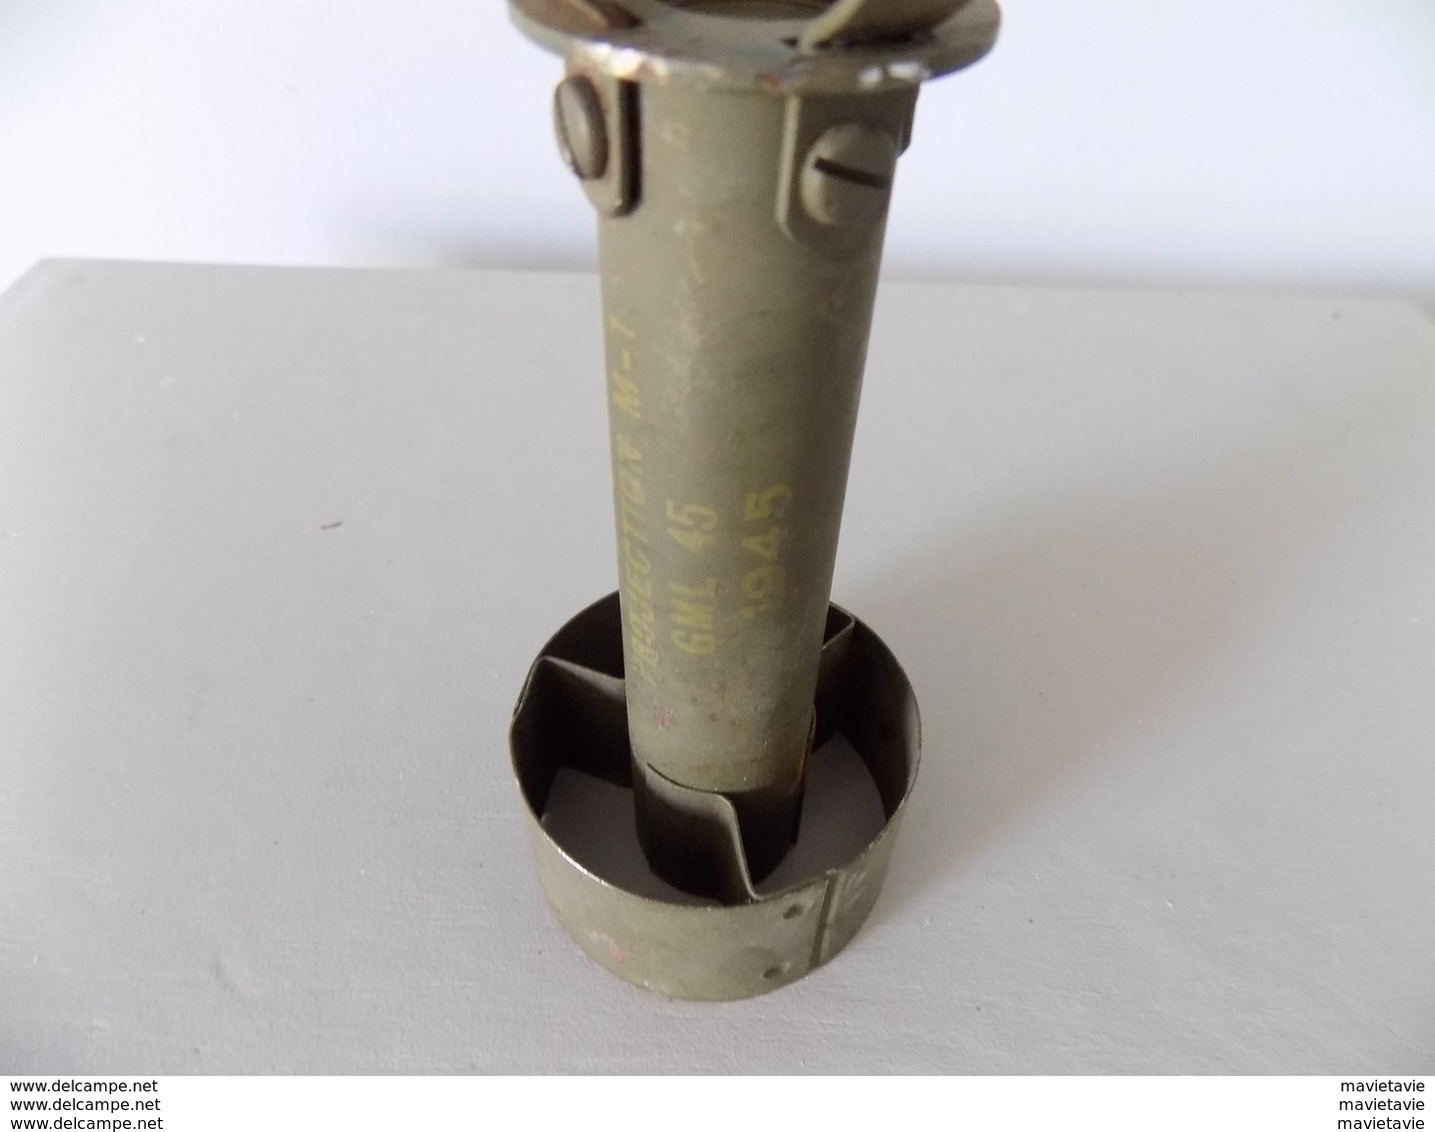 Lanceur de grenade MKII pour fusil GARAND datée 1945